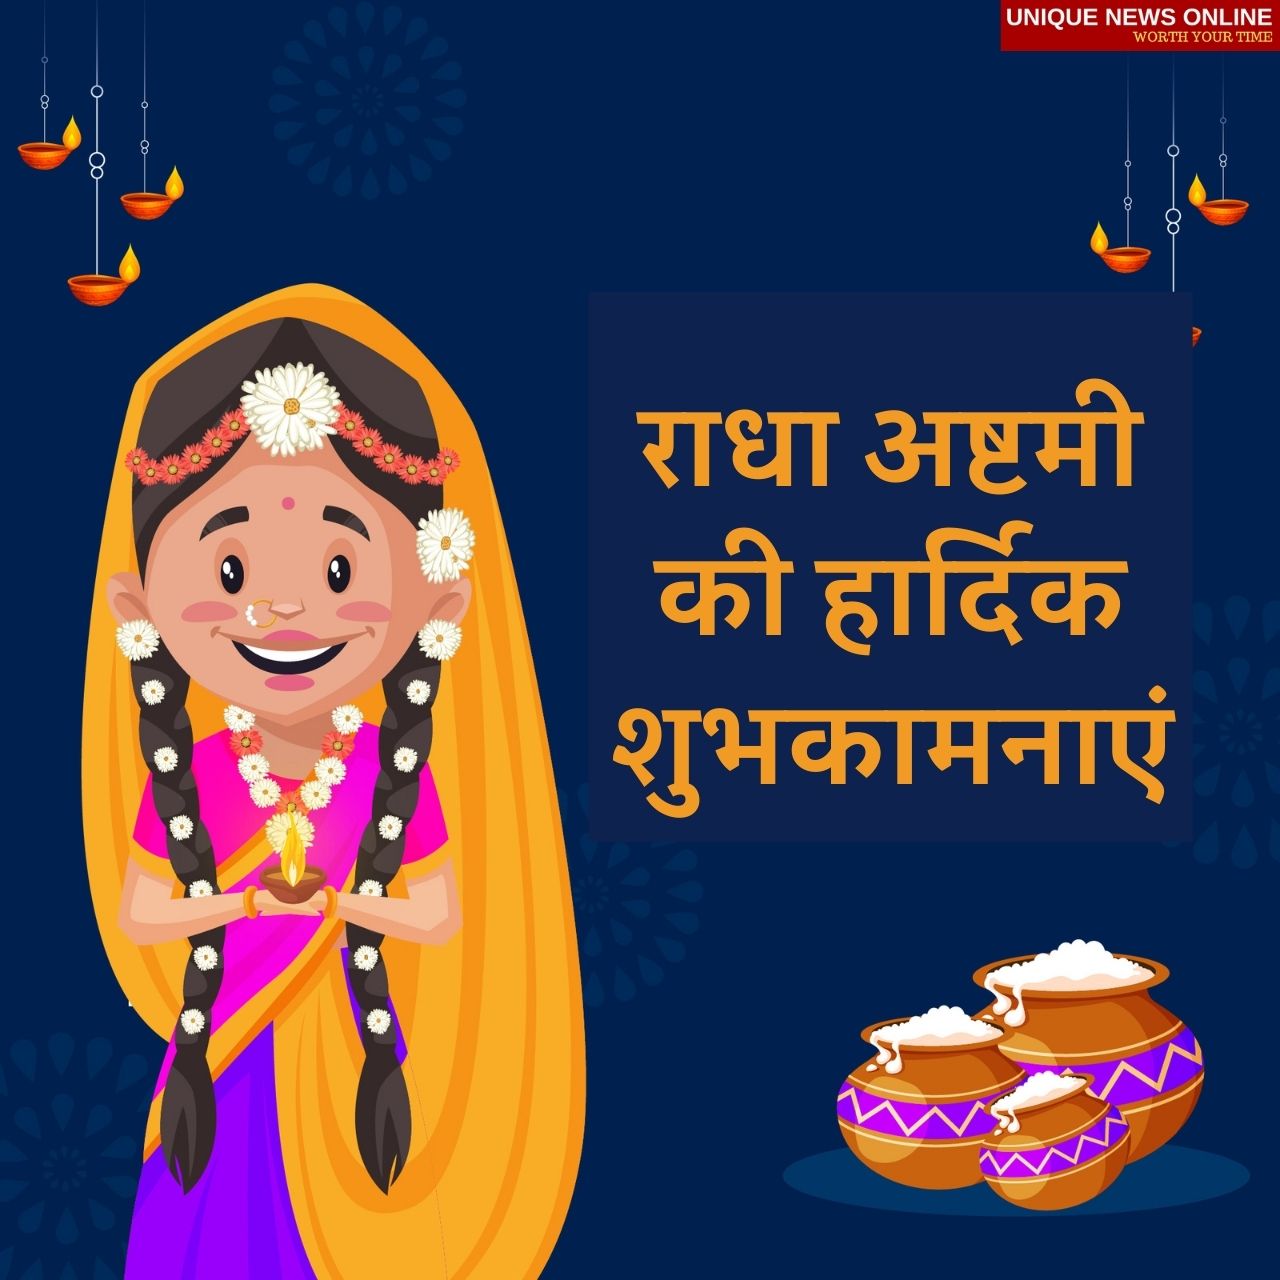 Happy Radha Ashtami 2021 Hindi Wishes, Shayari, Quotes, Wallpaper, Status,  and Messages to Share